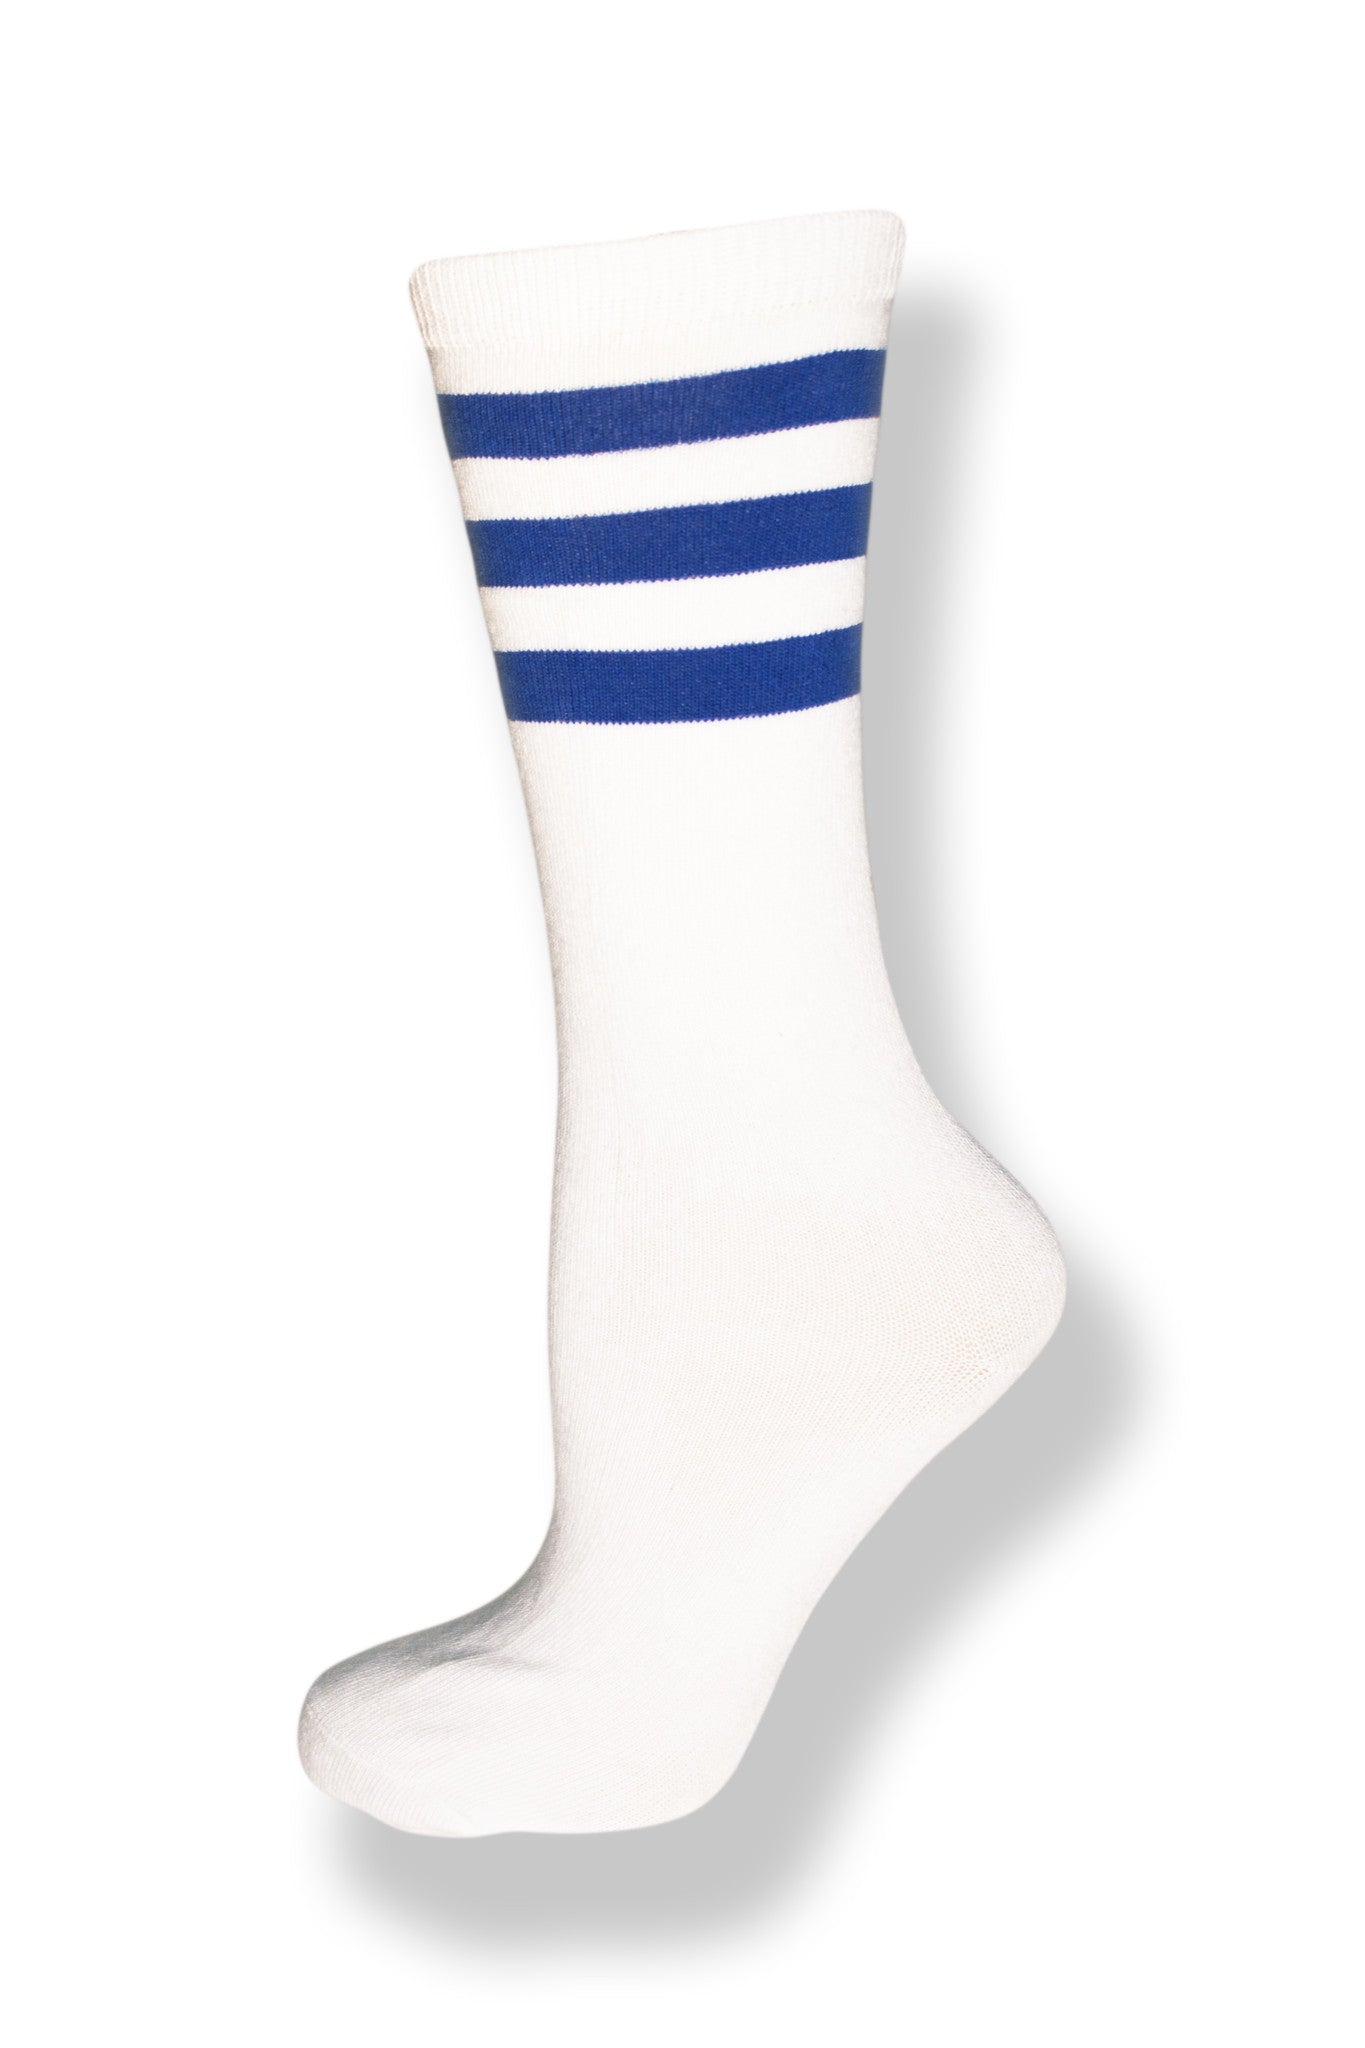 Unisex Mid Calf High White Sock w/ Royal Blue Stripes